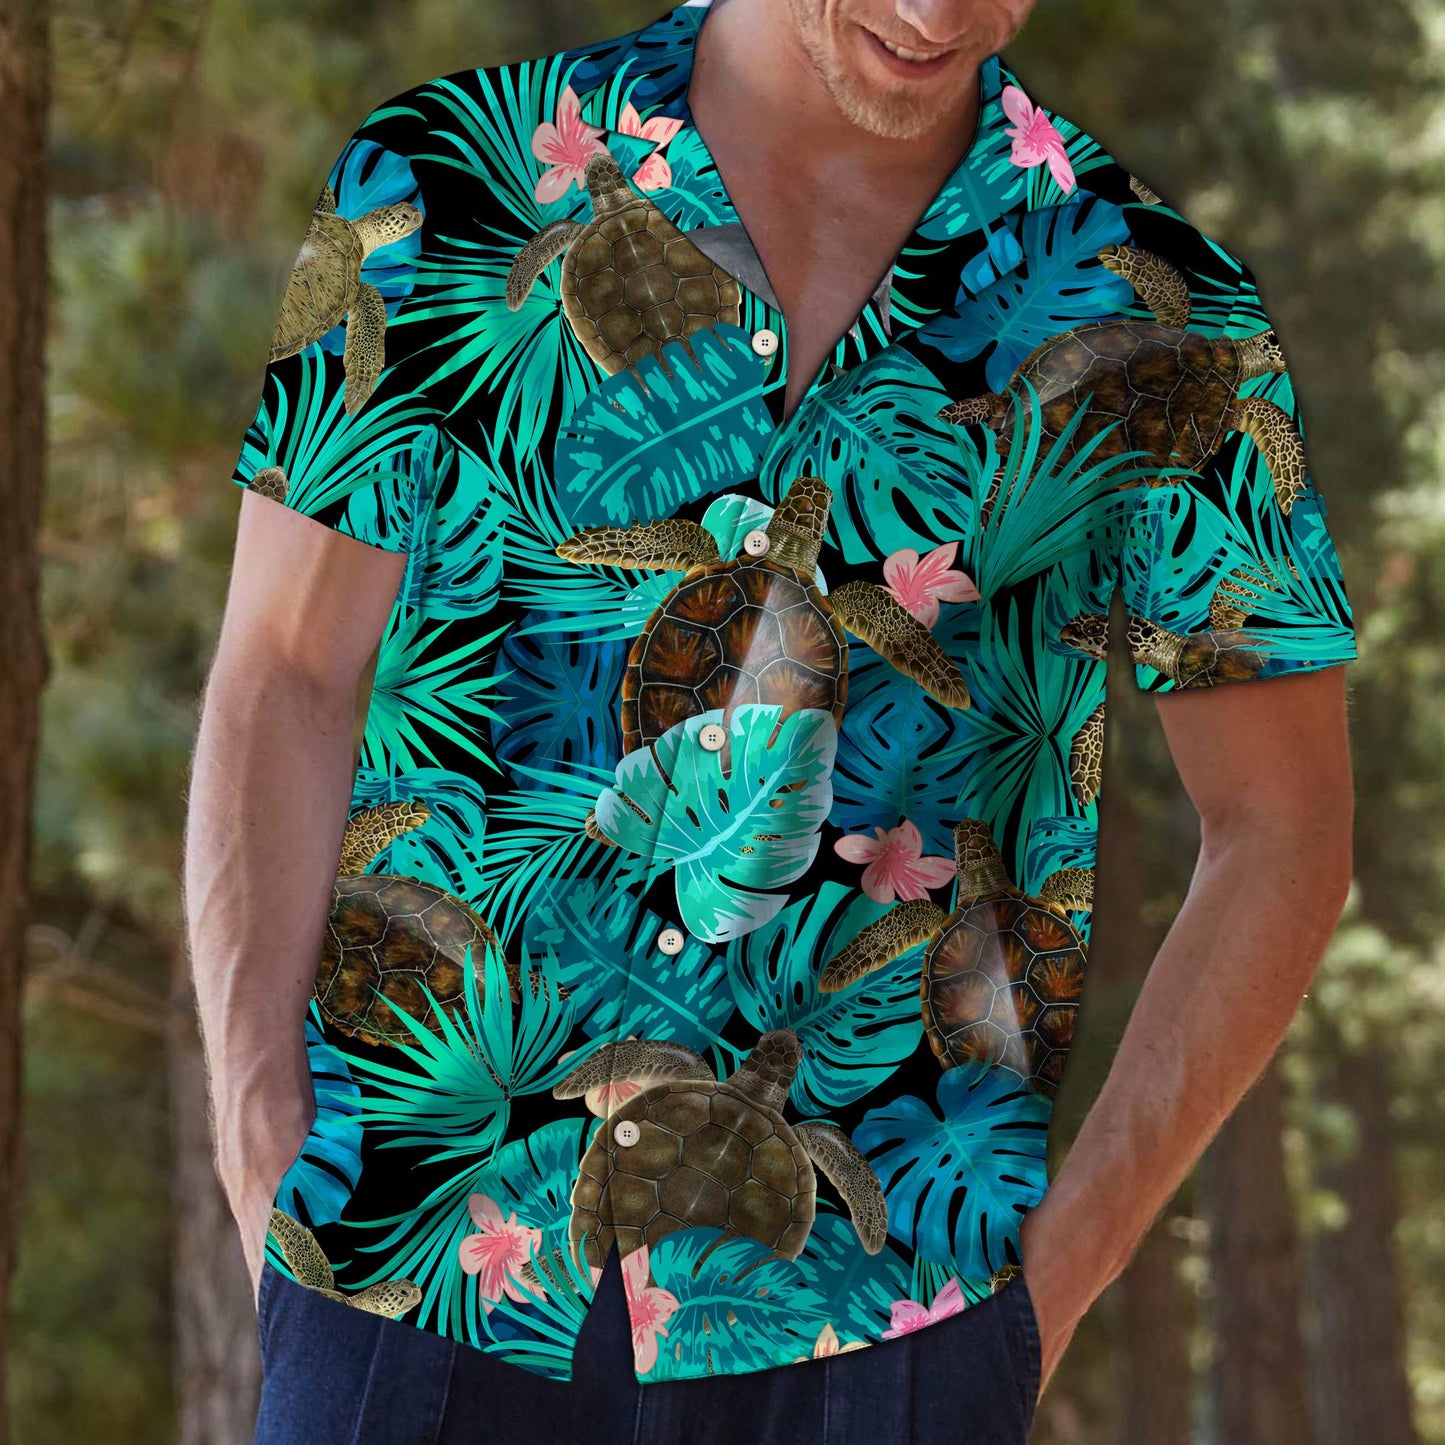 Awesome Turtle Tropical G5702 - Hawaii Shirt